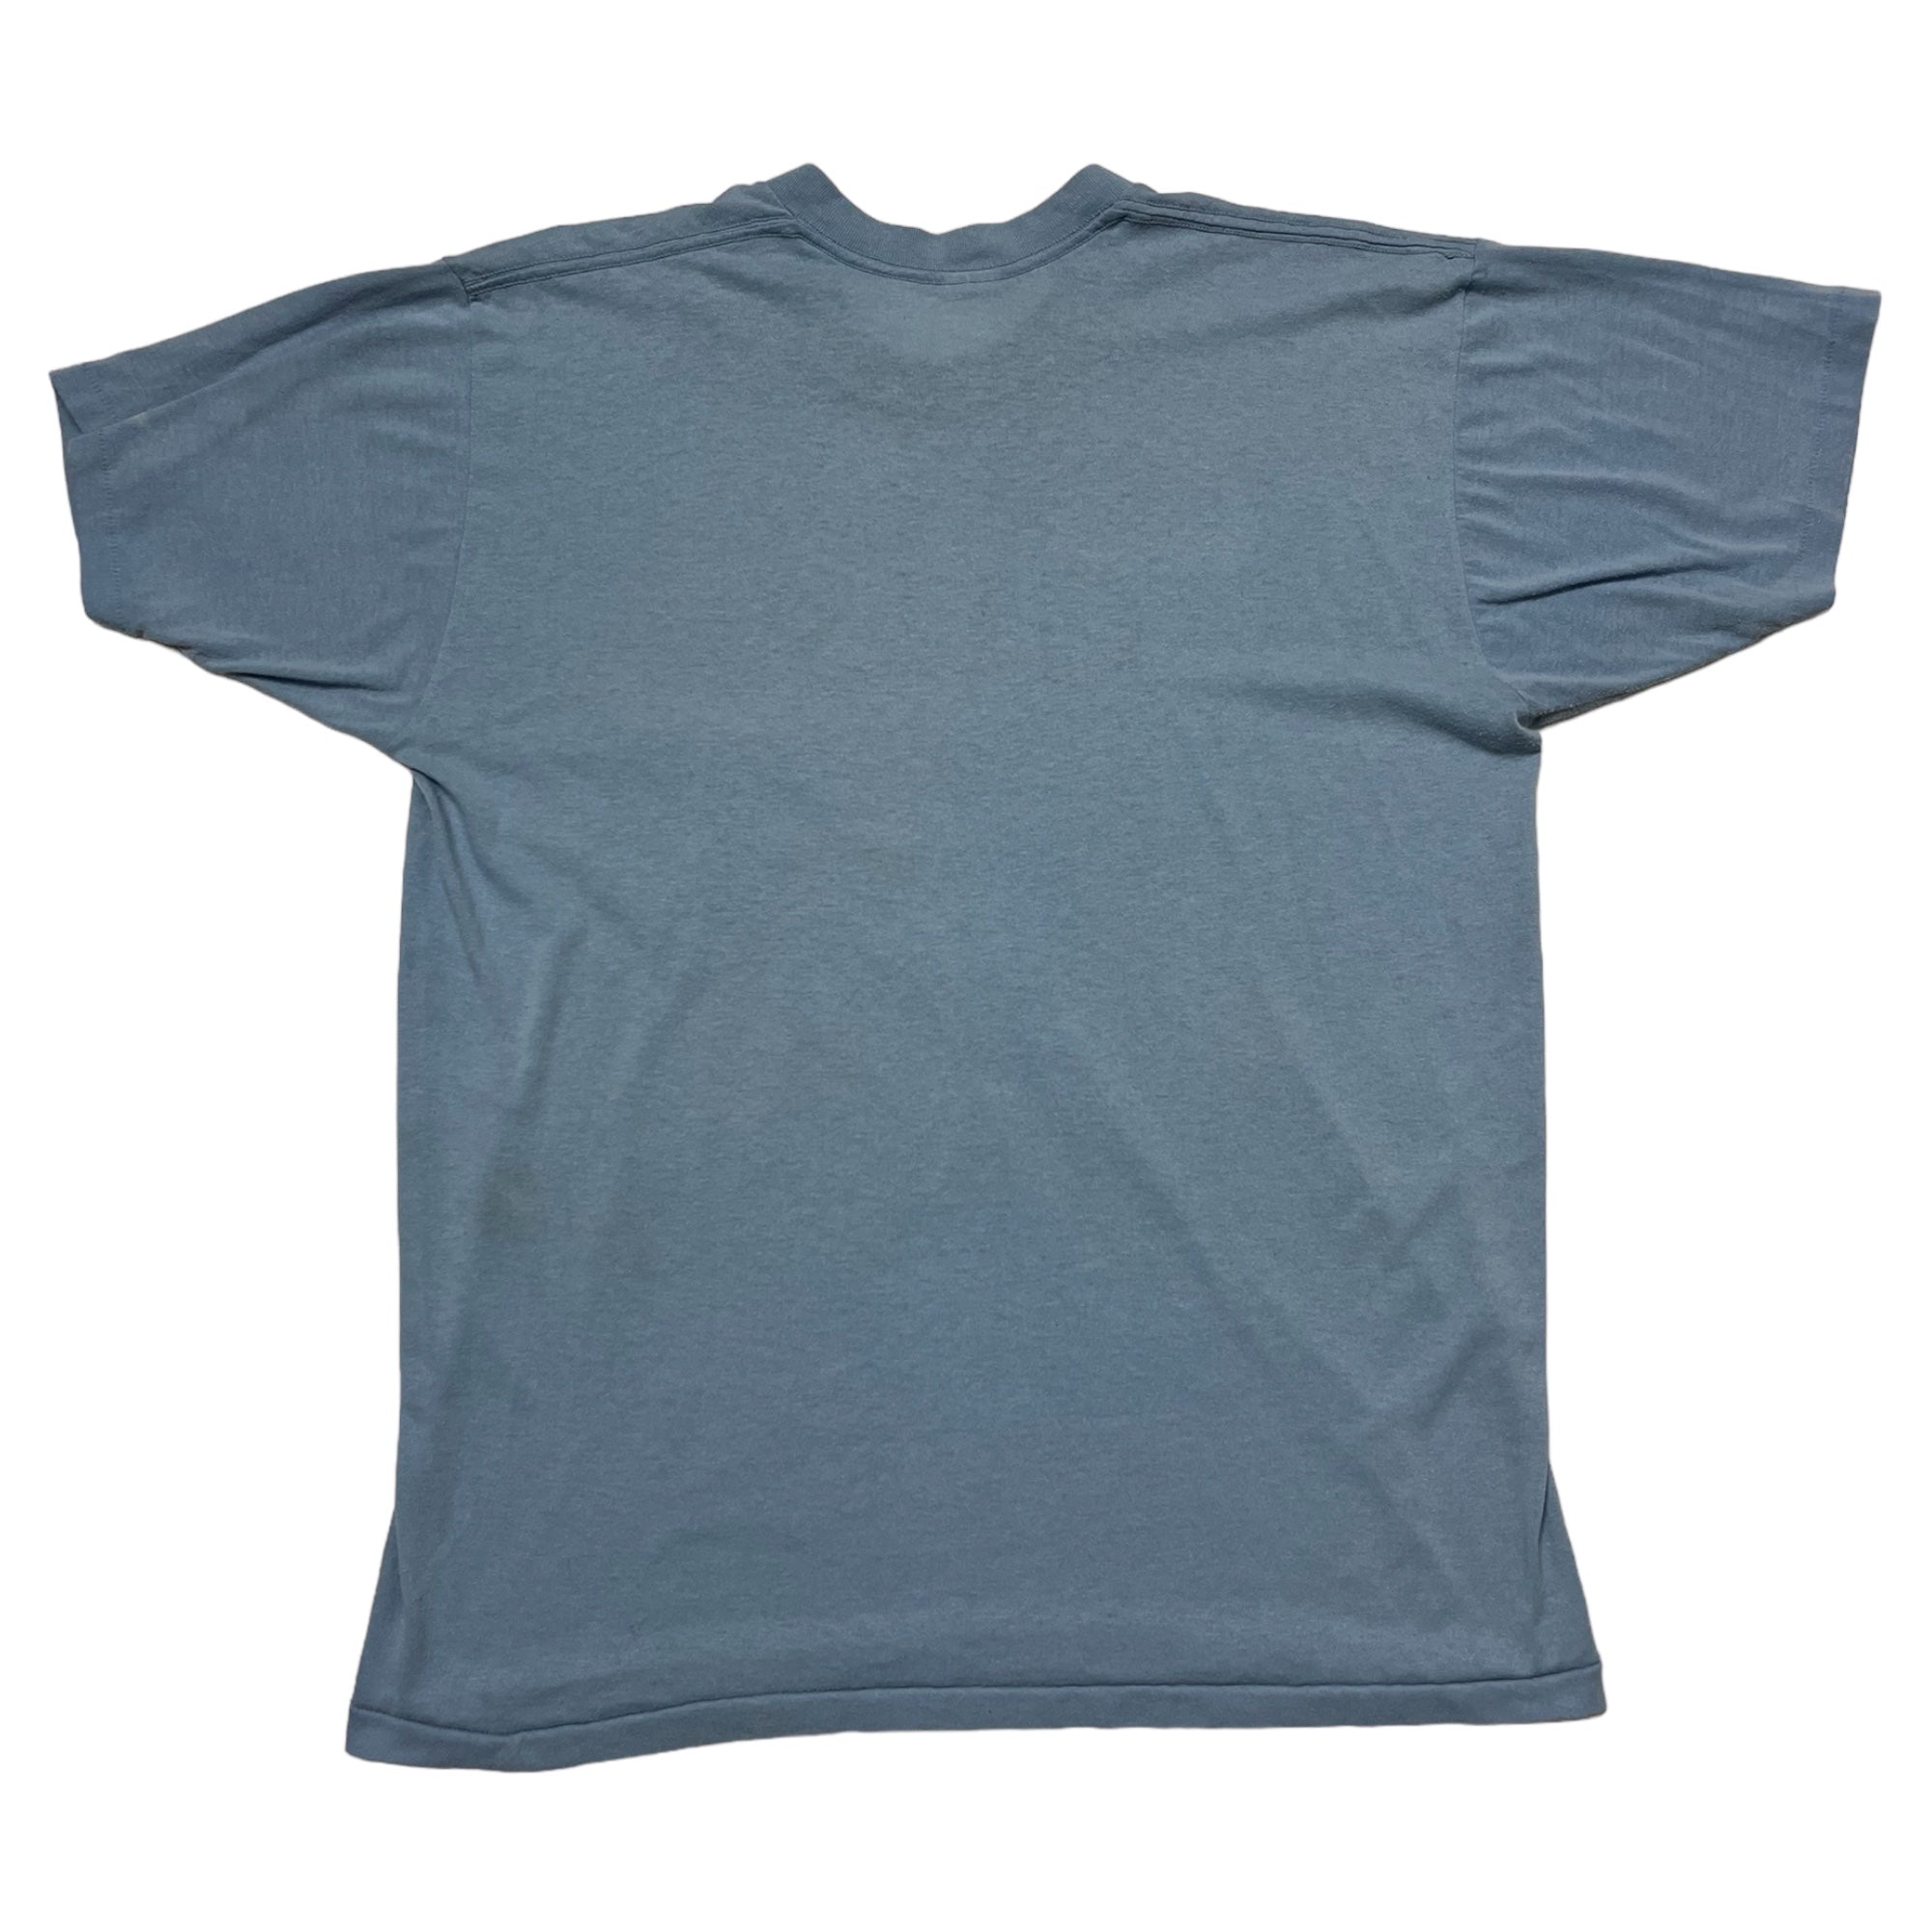 1970s Hand-Drawn ‘Gus’ Pocket T-Shirt - Light Blue - M/L